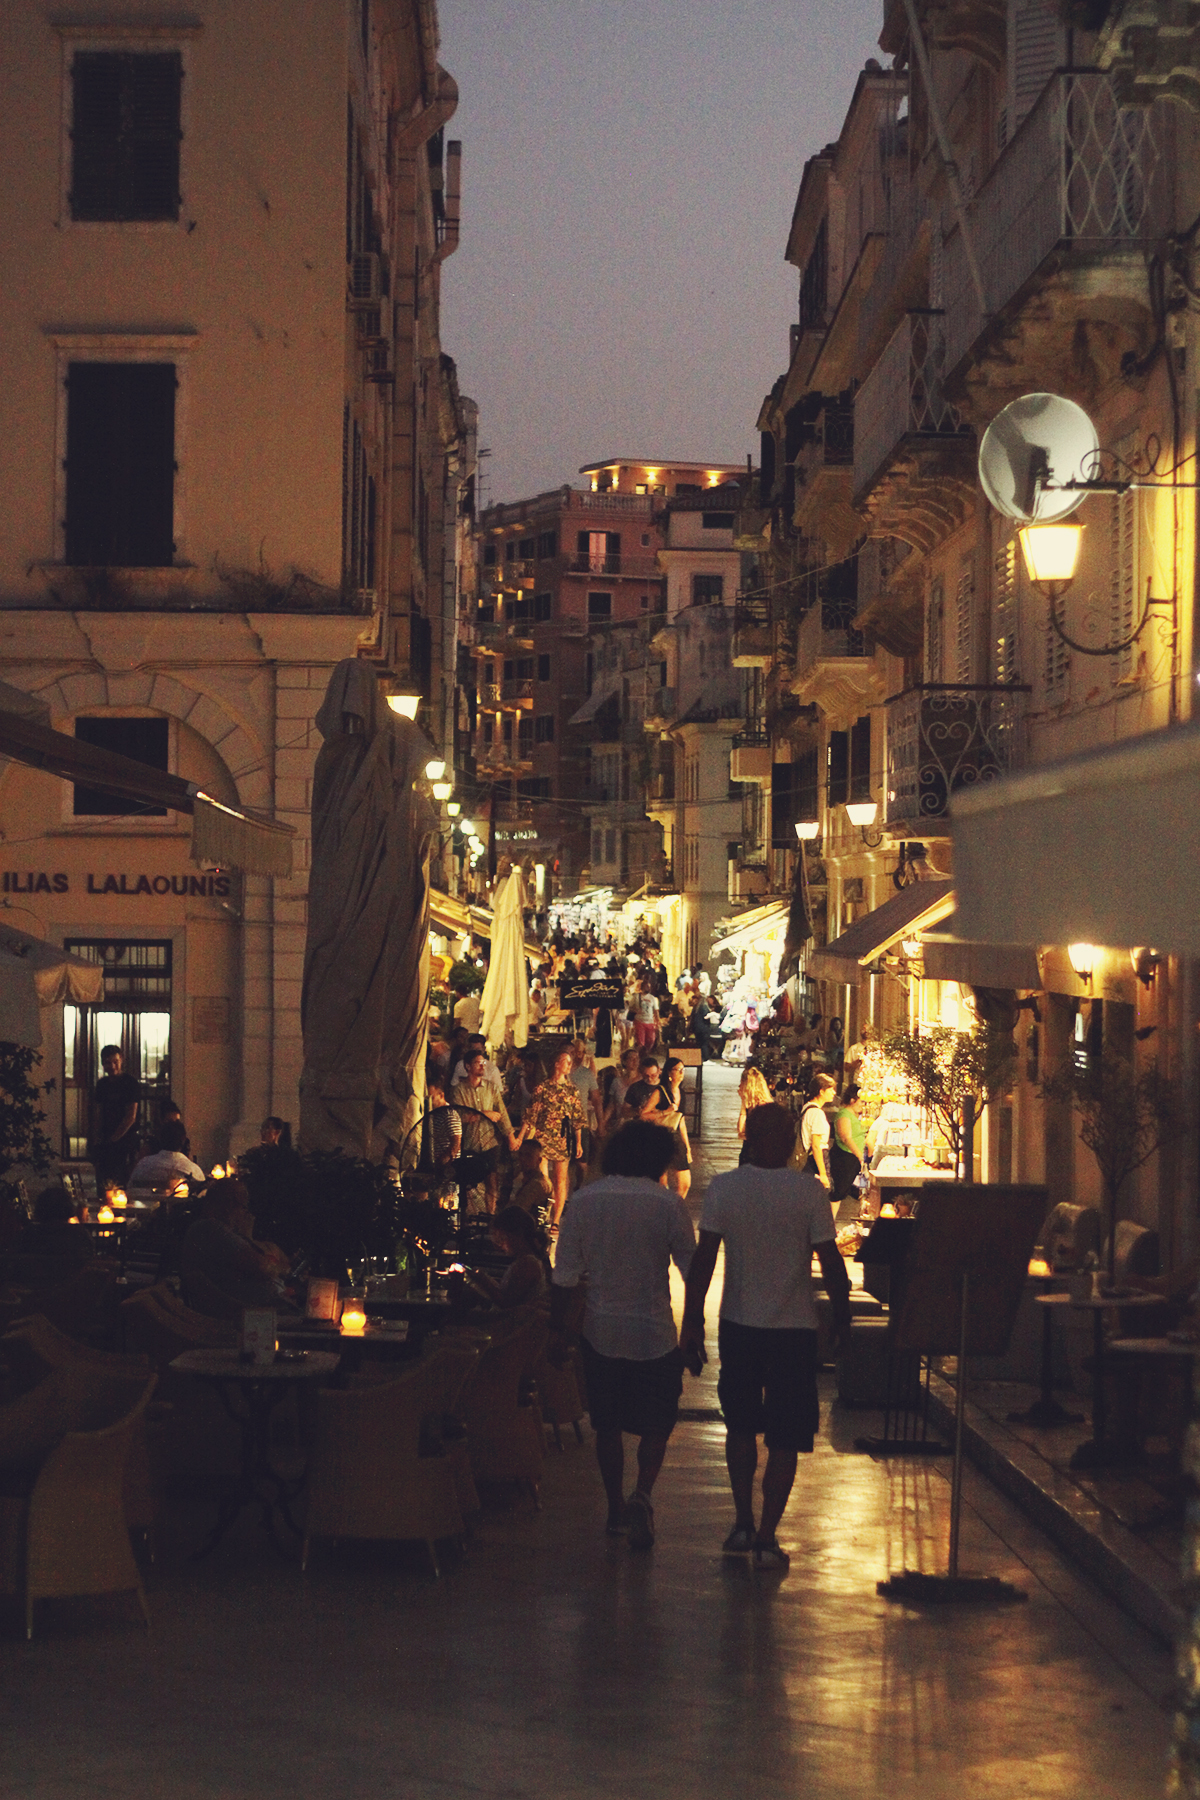 Corfu Town by night, busy narrow street, travel post